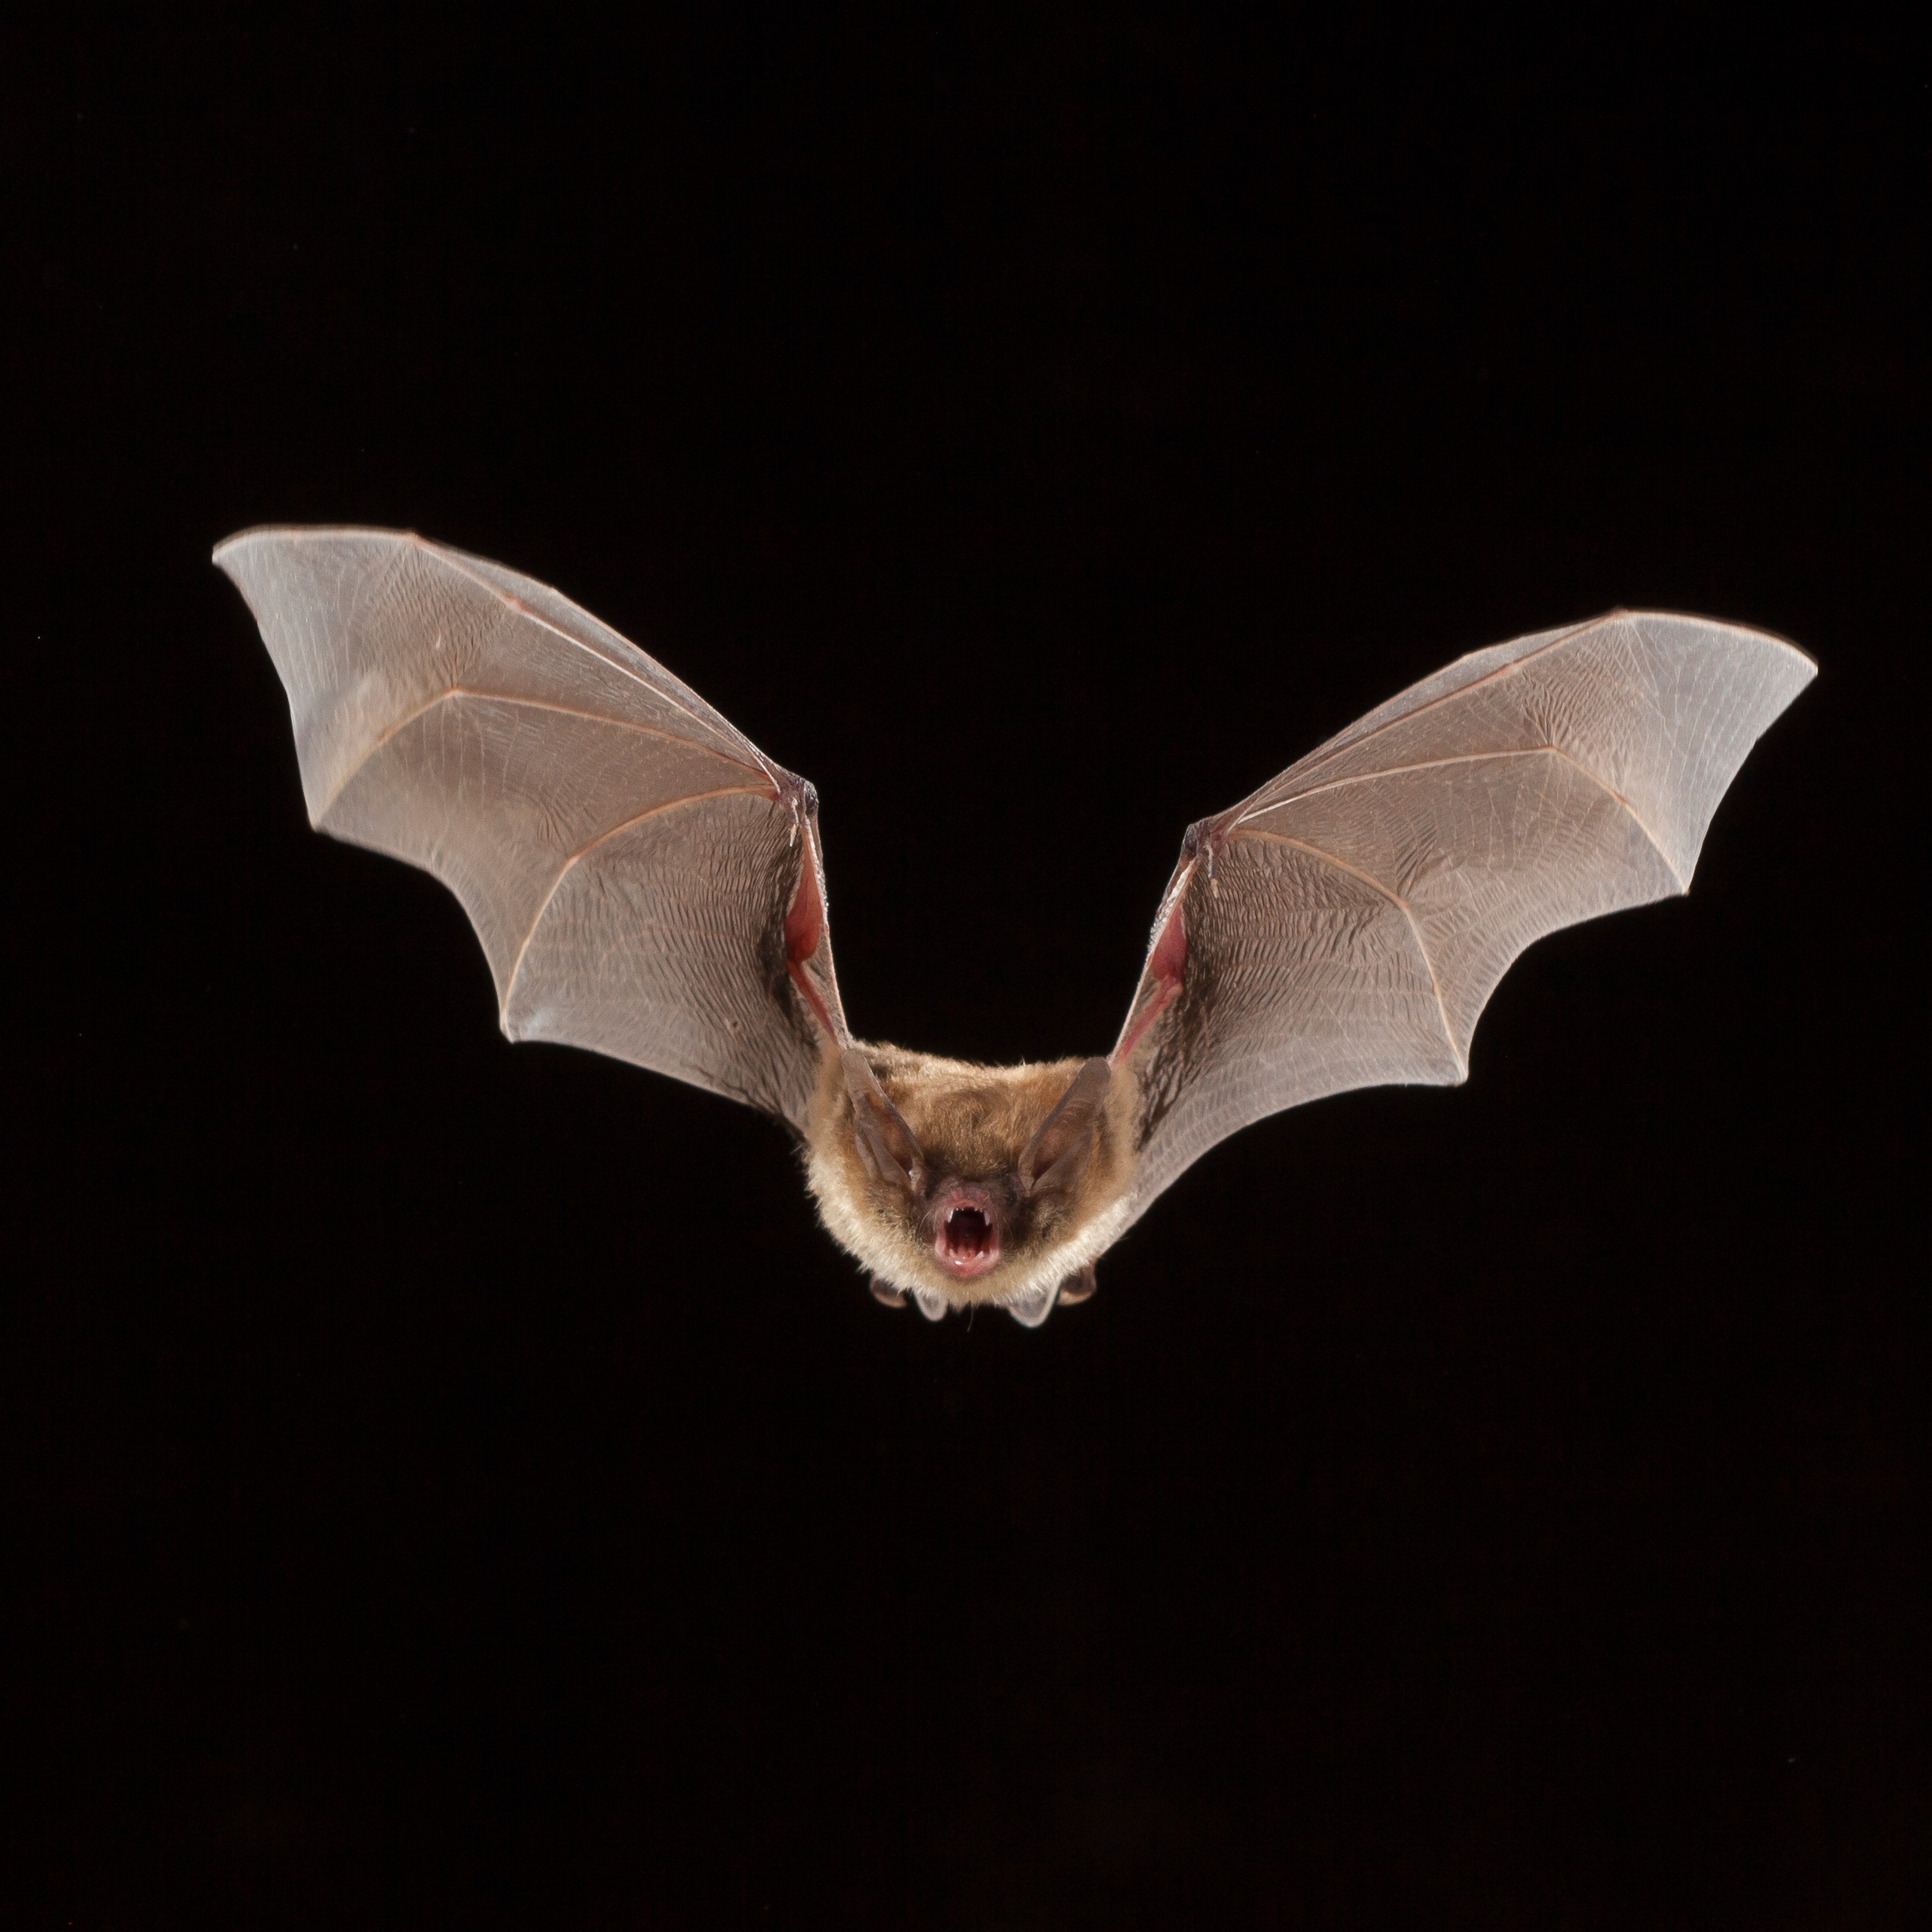 a picture of a bat